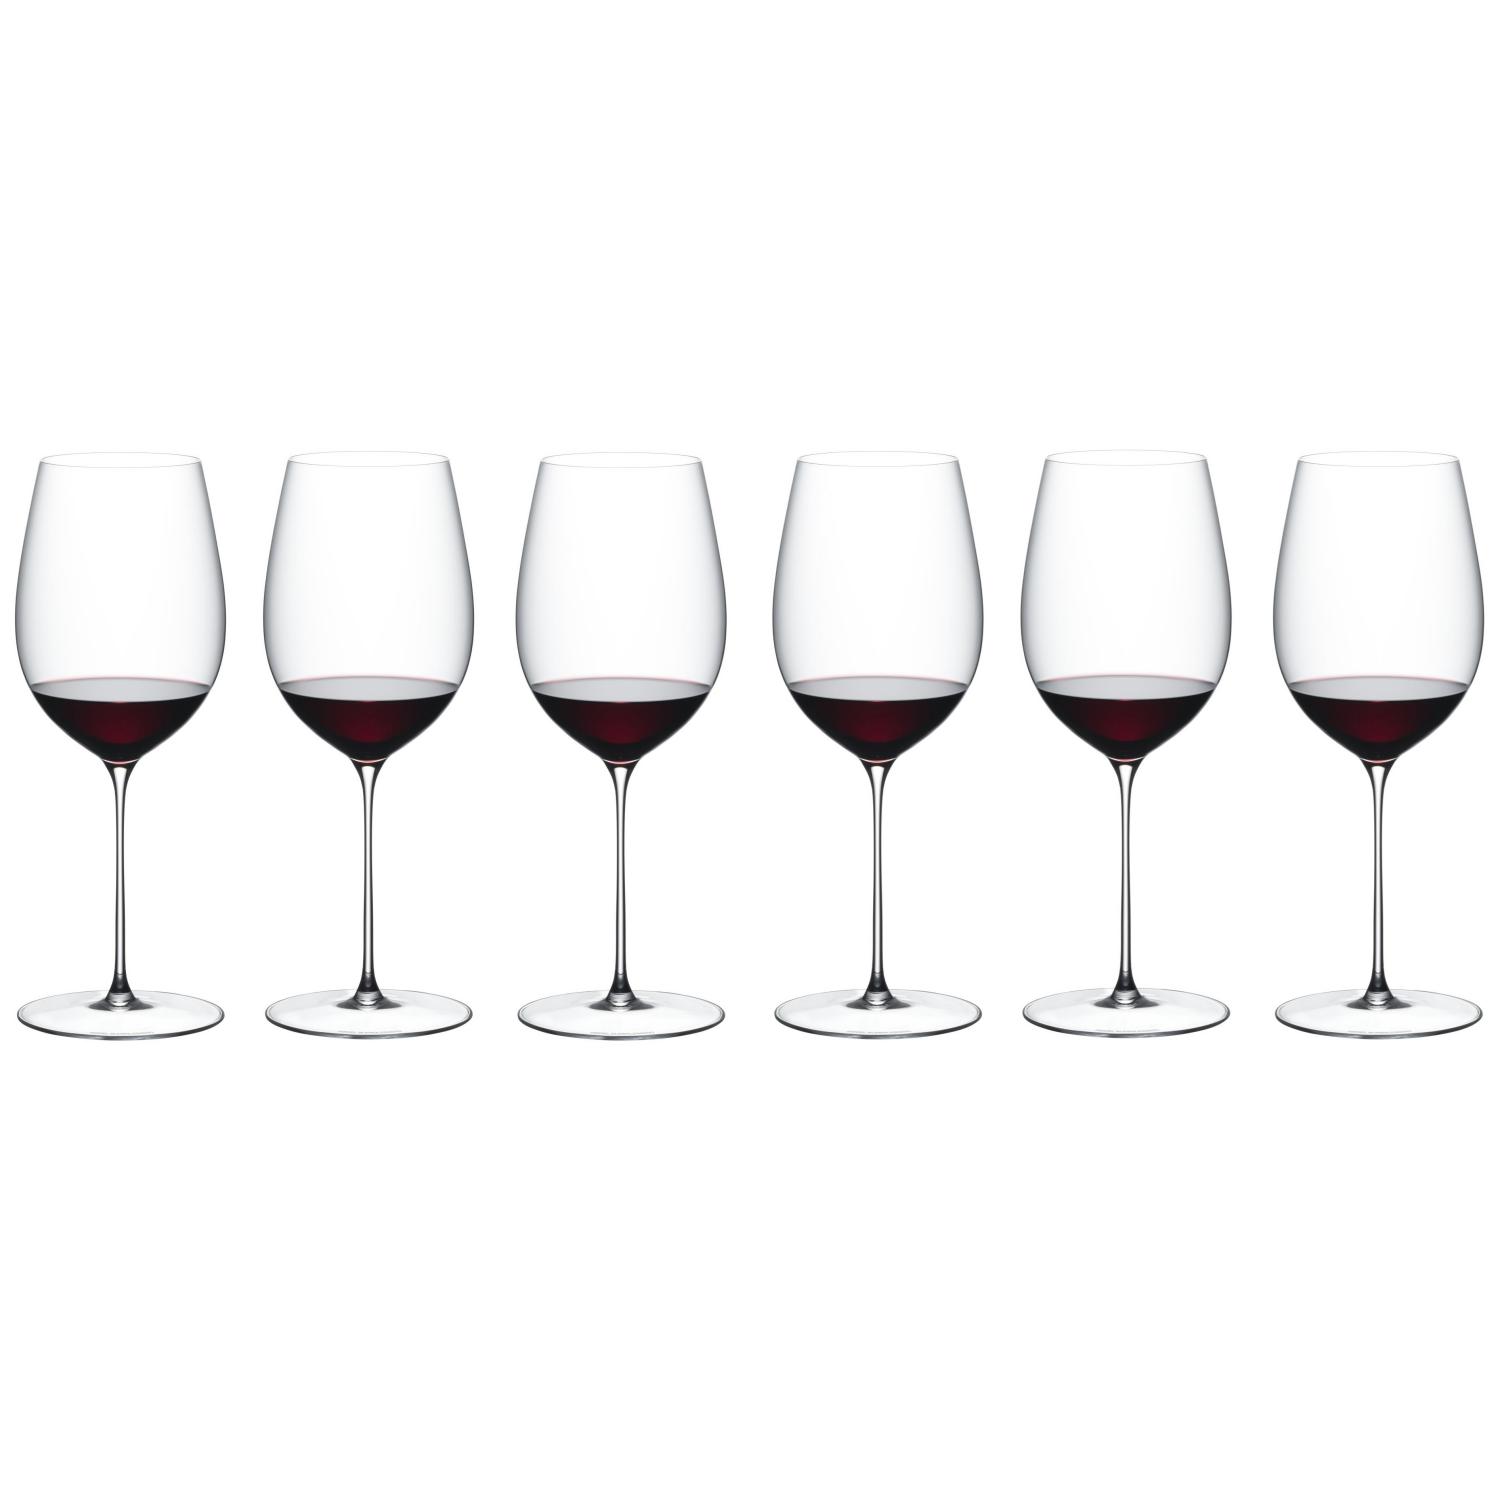 6 бокалов для красного вина RIEDEL Superleggero Party Set Bordeaux Grand Cru 953 мл